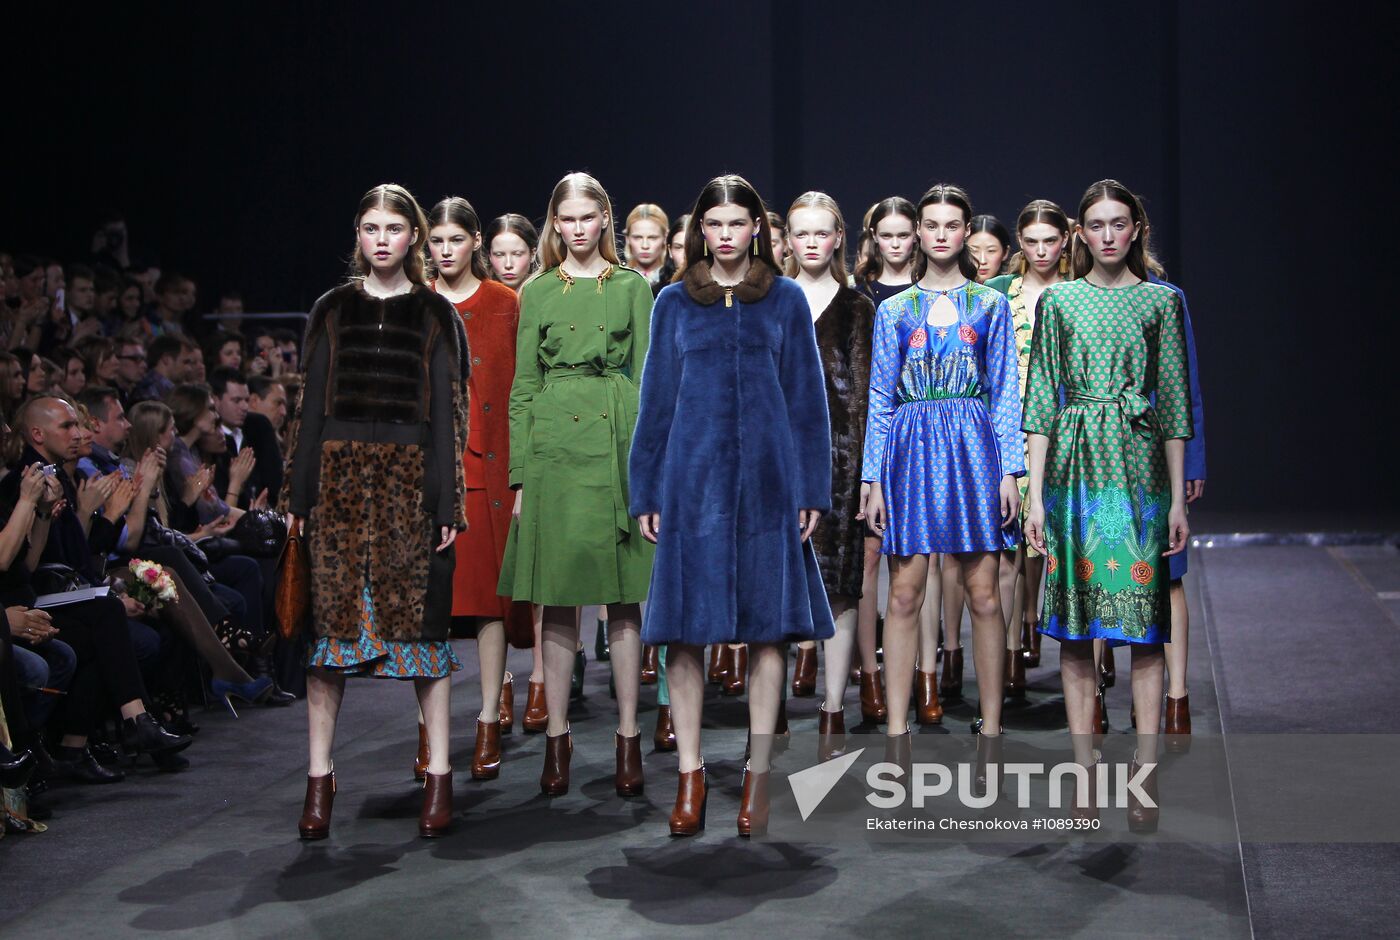 Volvo Fashion Week Moscow closes its 27th season